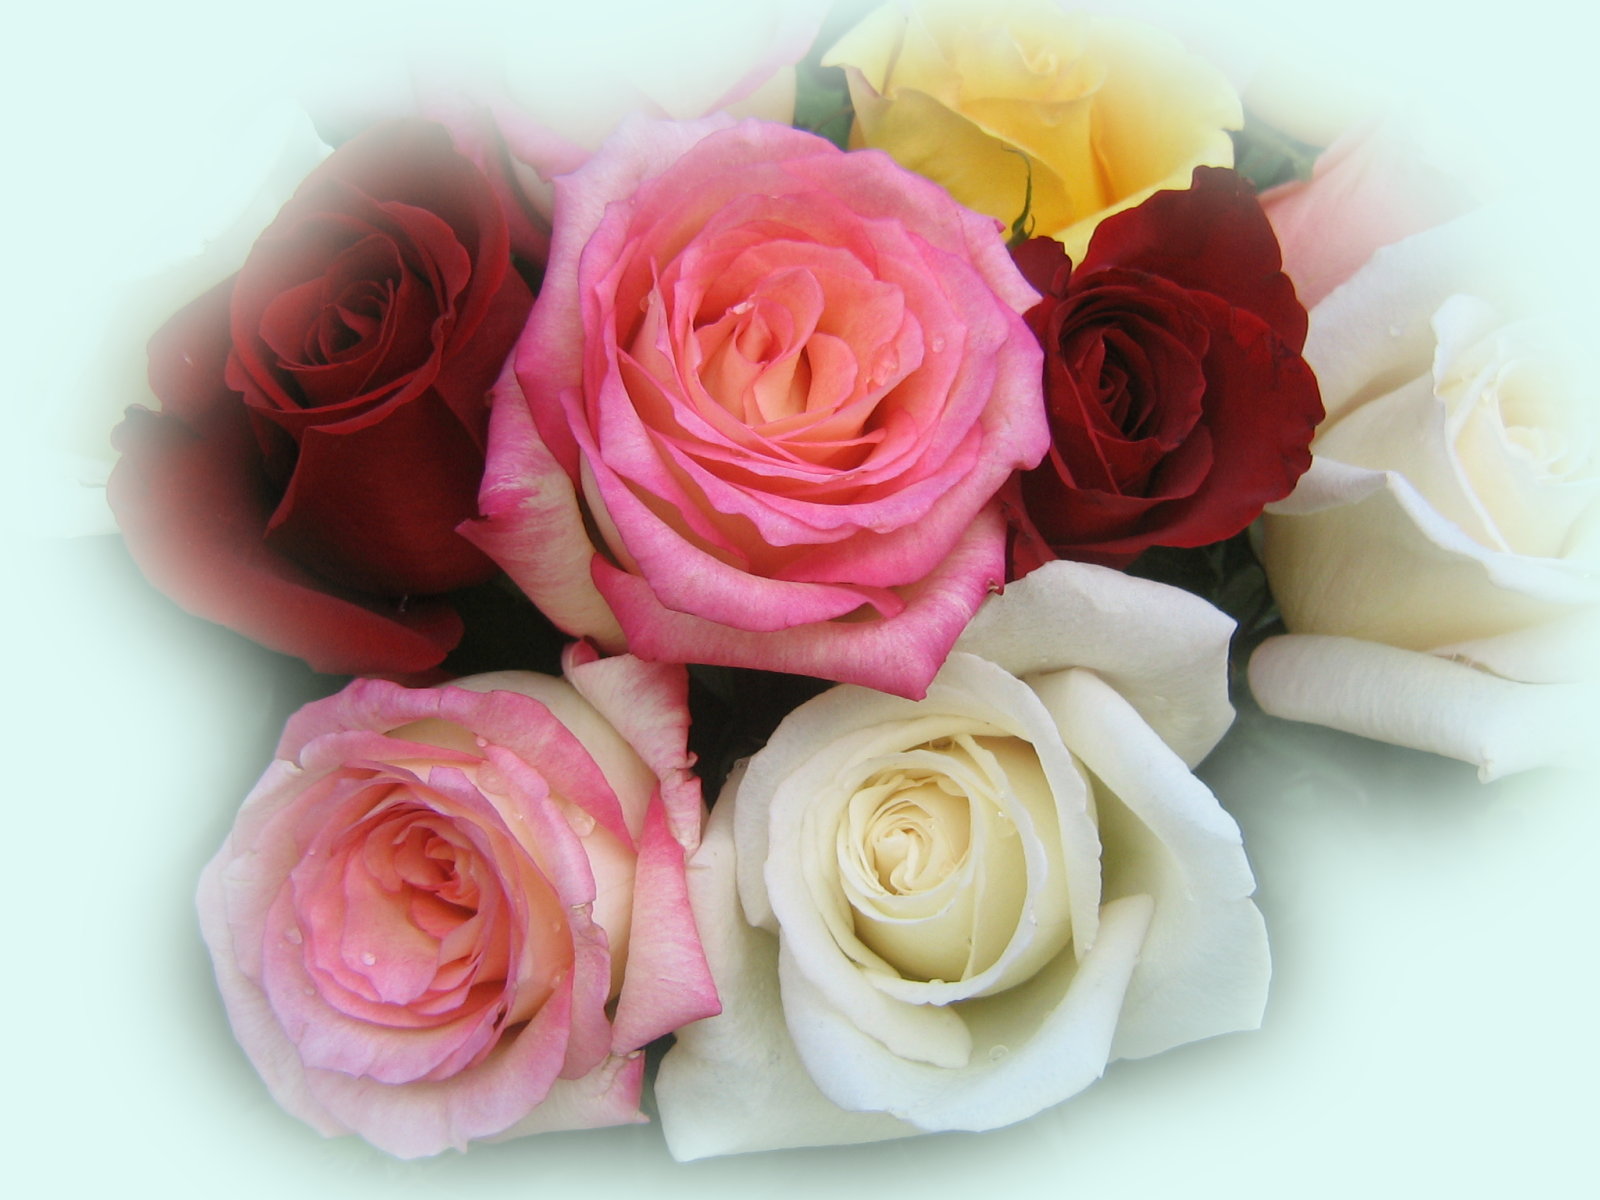 roses_bouquet_3566.jpg